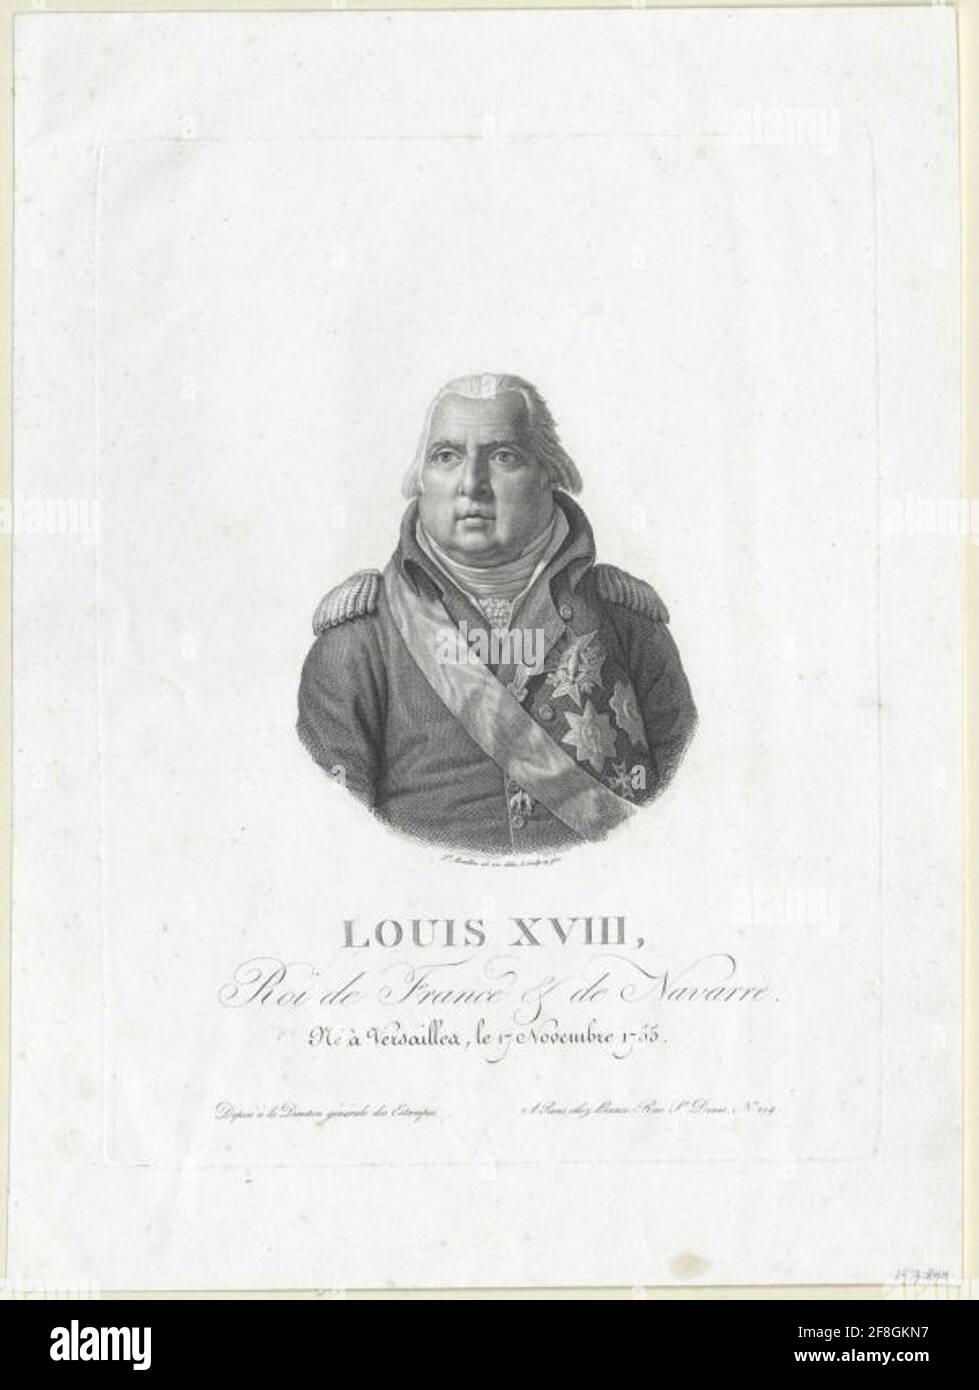 Ludwig Xviii., King of France. Stock Photo